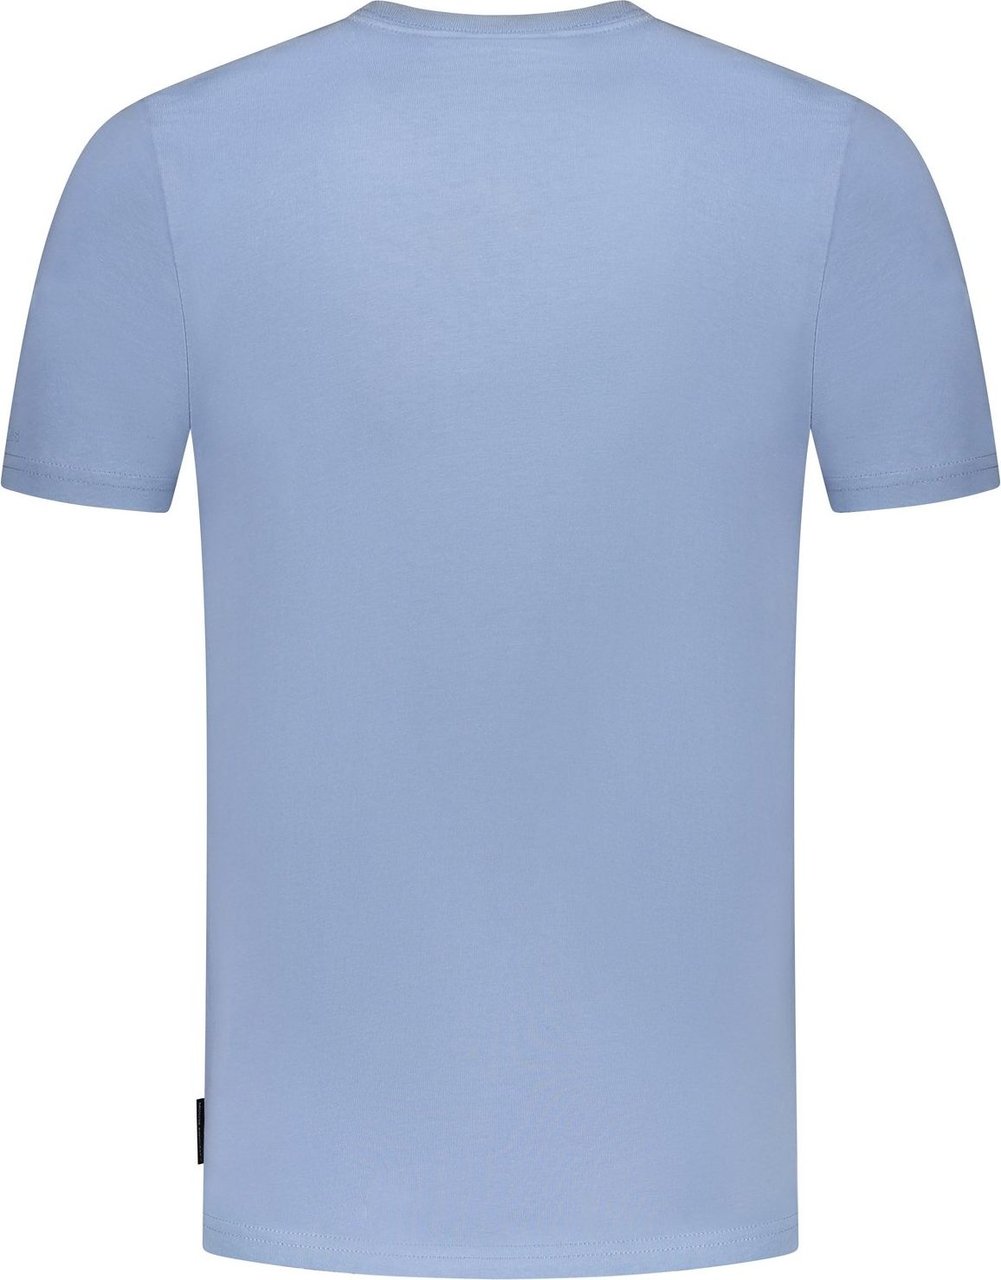 Moose Knuckles T-shirt Blauw Blauw